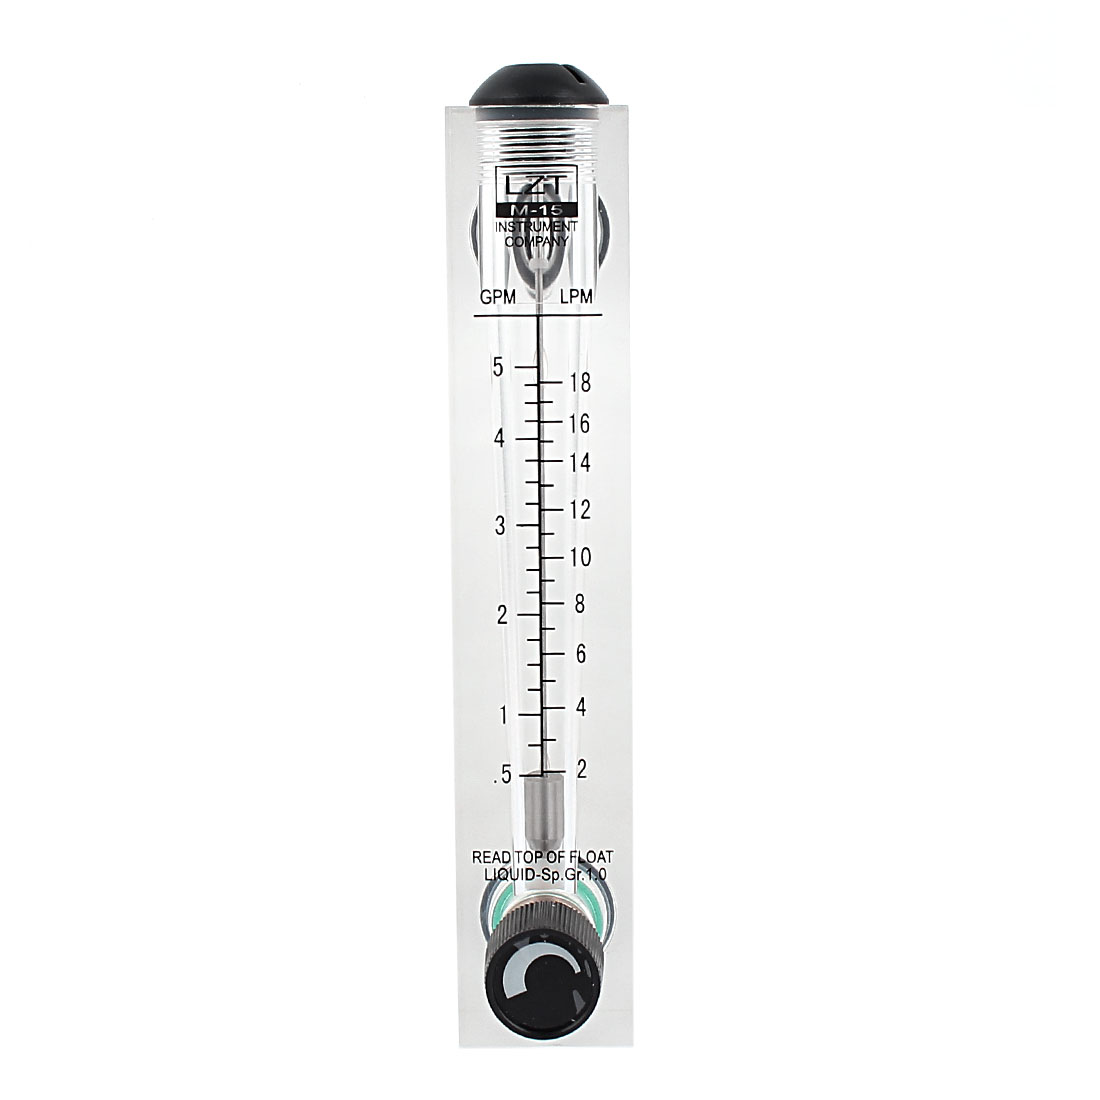 LZT M-15 0.5-5GPM 2-18LPM Adjustable Knob Water Flow Meter Panel Type Flowmeter - image 1 of 4